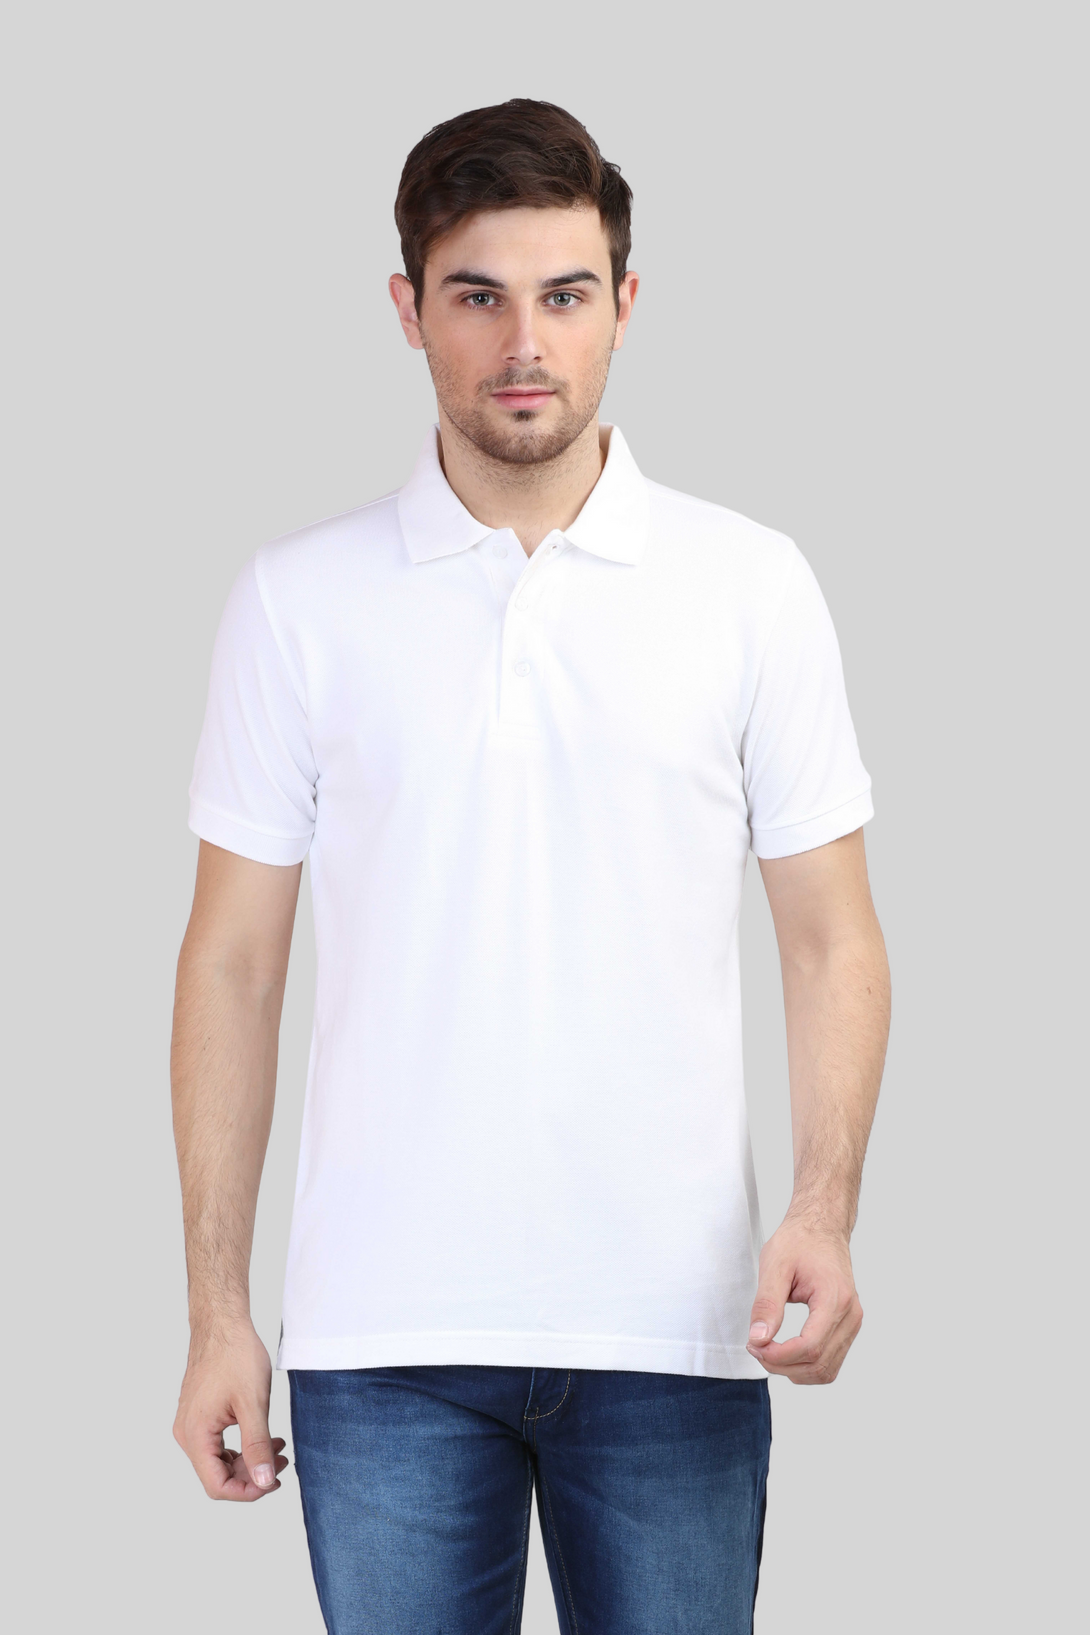 White Polo T-Shirt For Men - WowWaves - 1